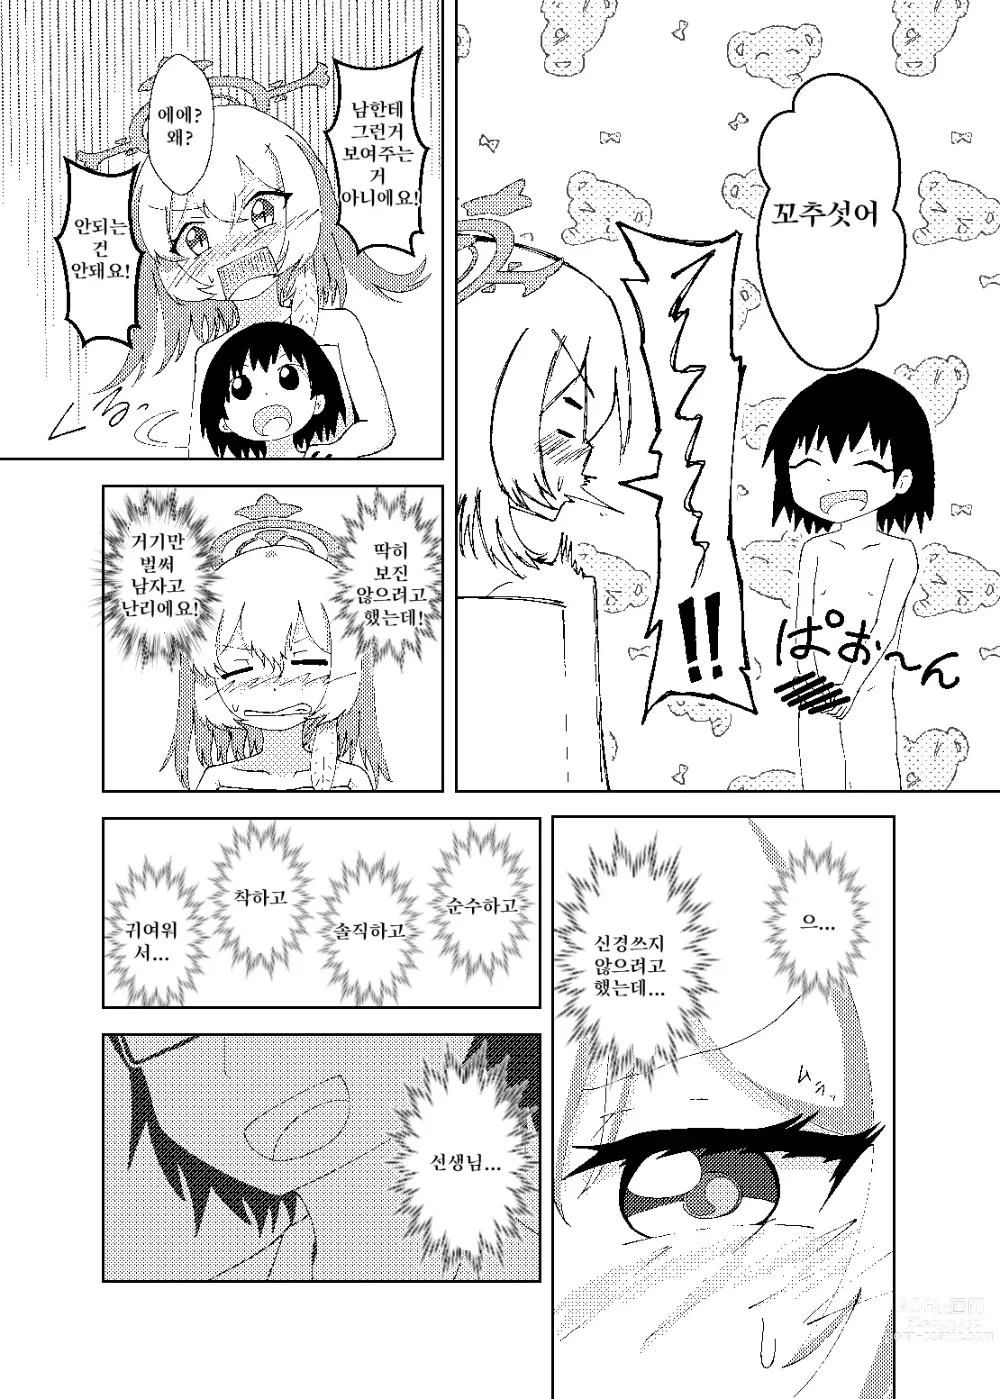 Page 12 of doujinshi 세리나가 유아화 선생님을 간호하는 이야기